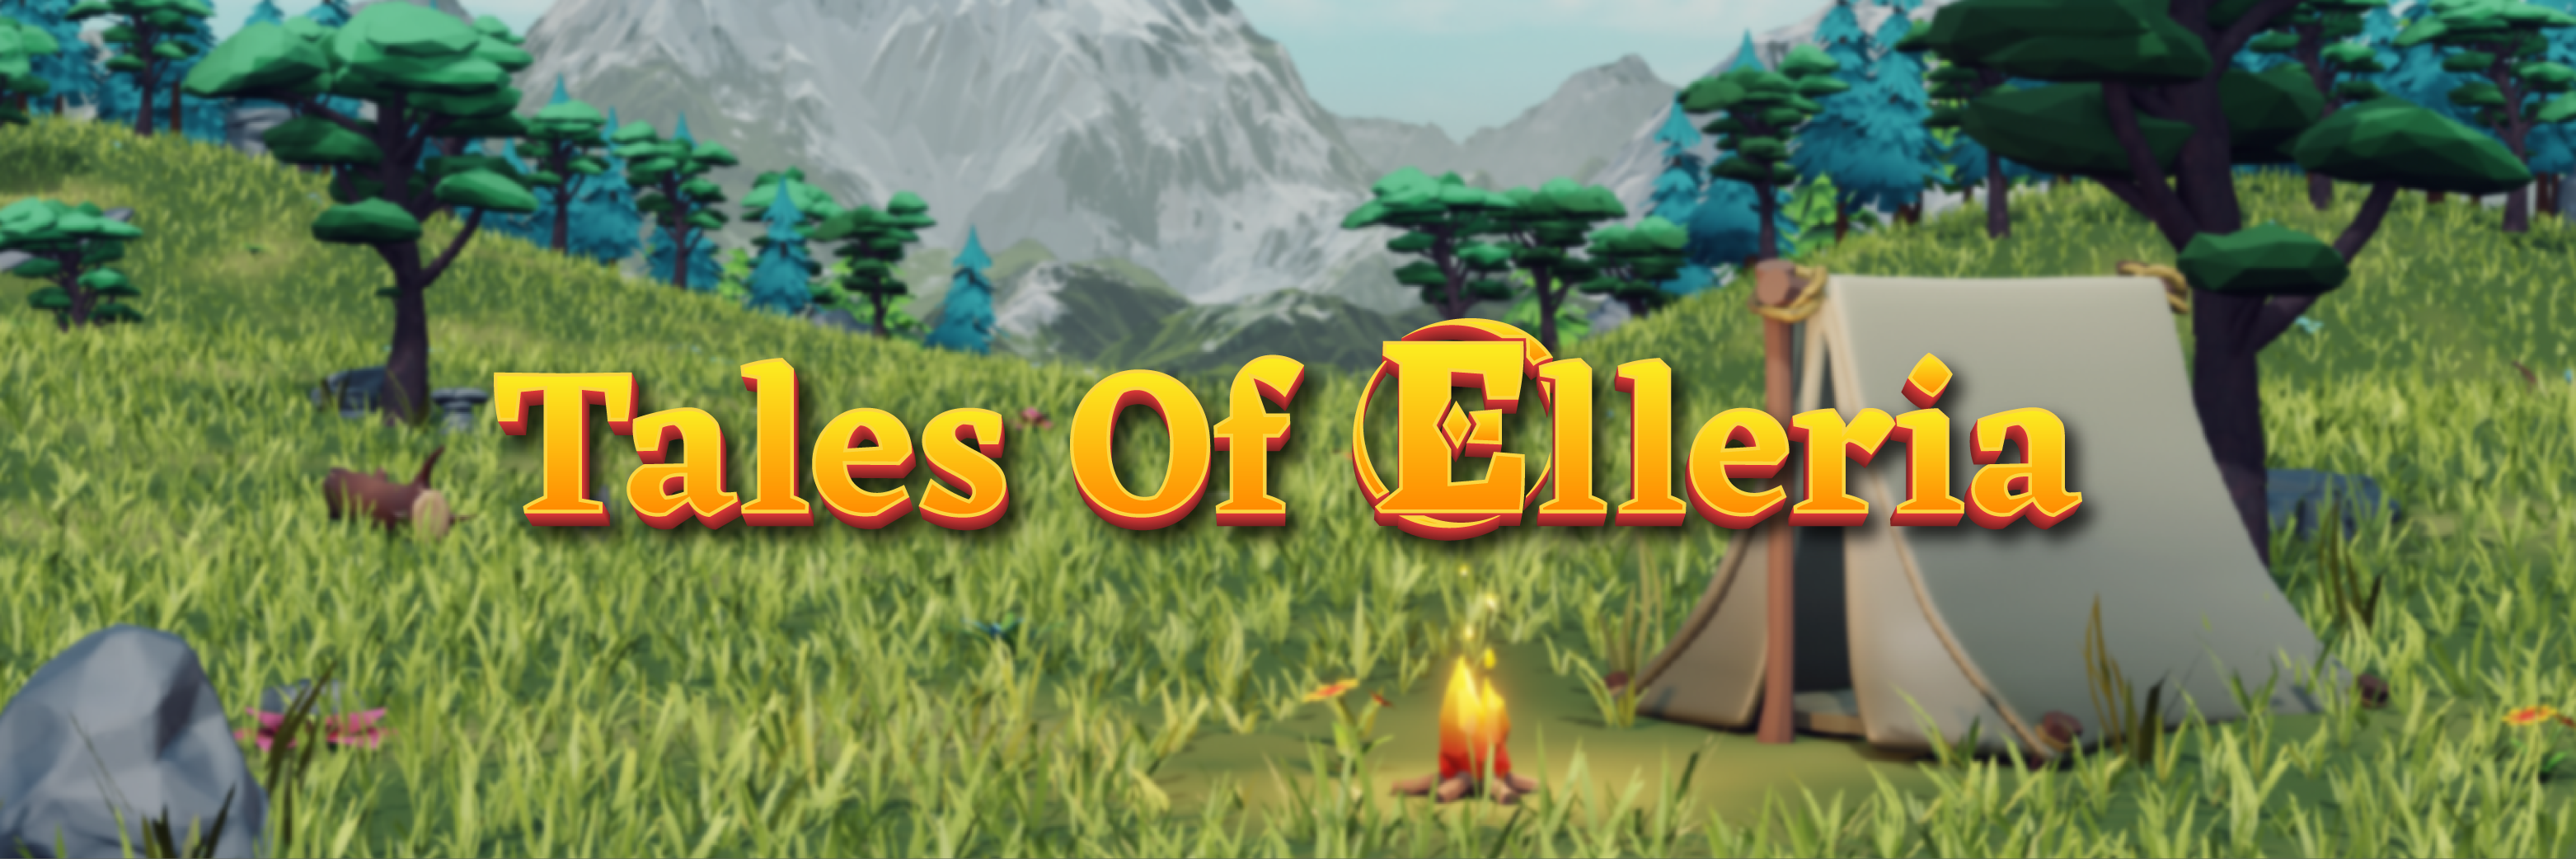 Tales of Elleria banner.png